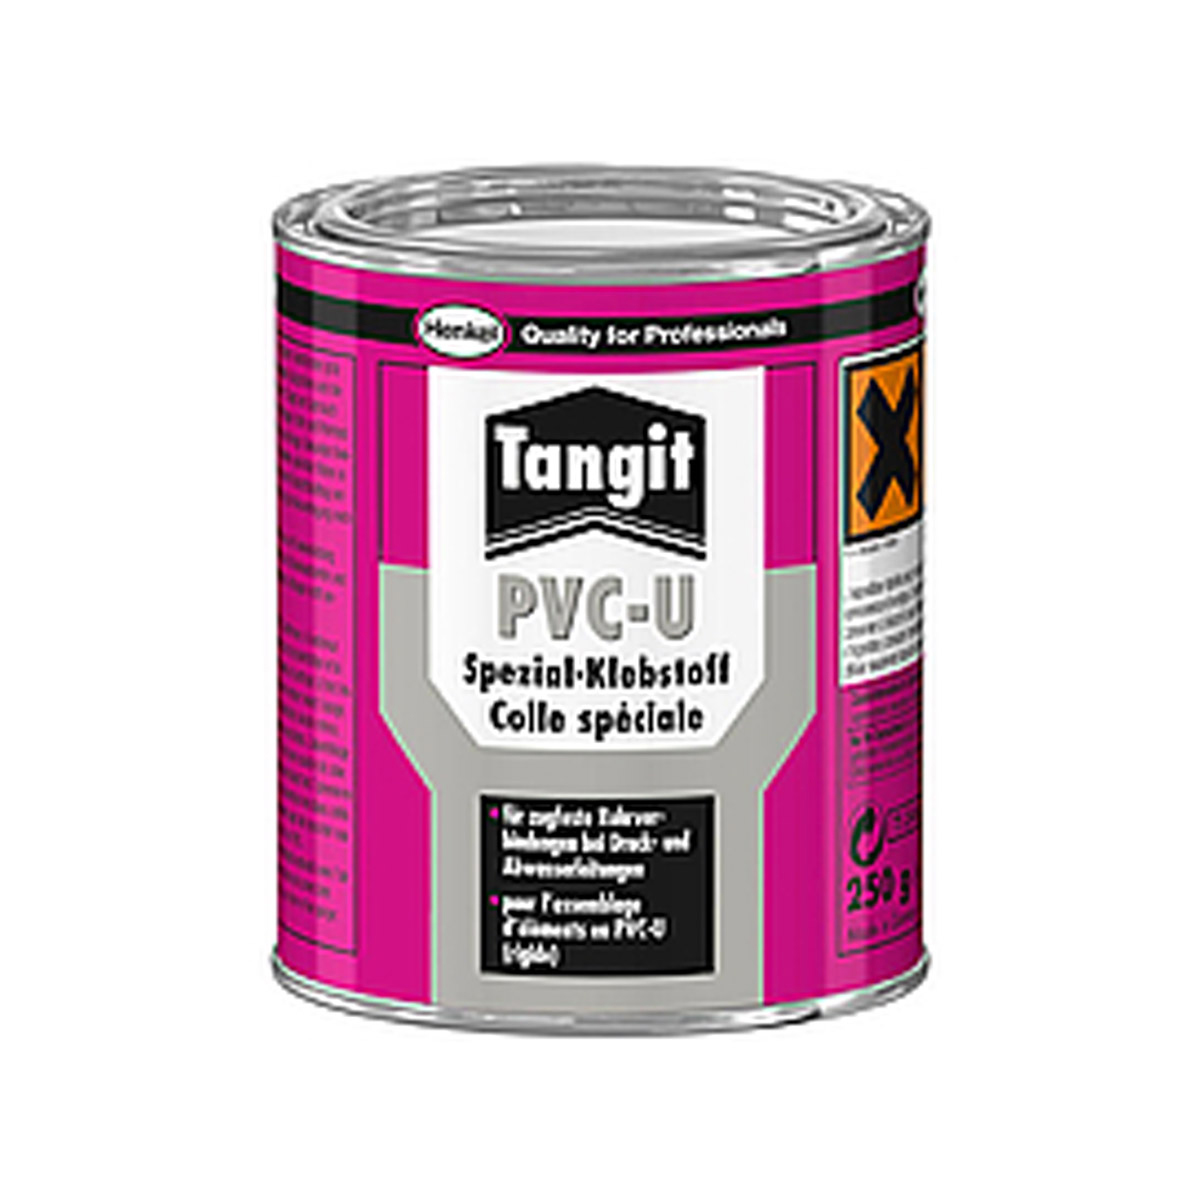 Tangit® PVC-U special adhesive 125g Tangit® PVC-U special adhesive 125g